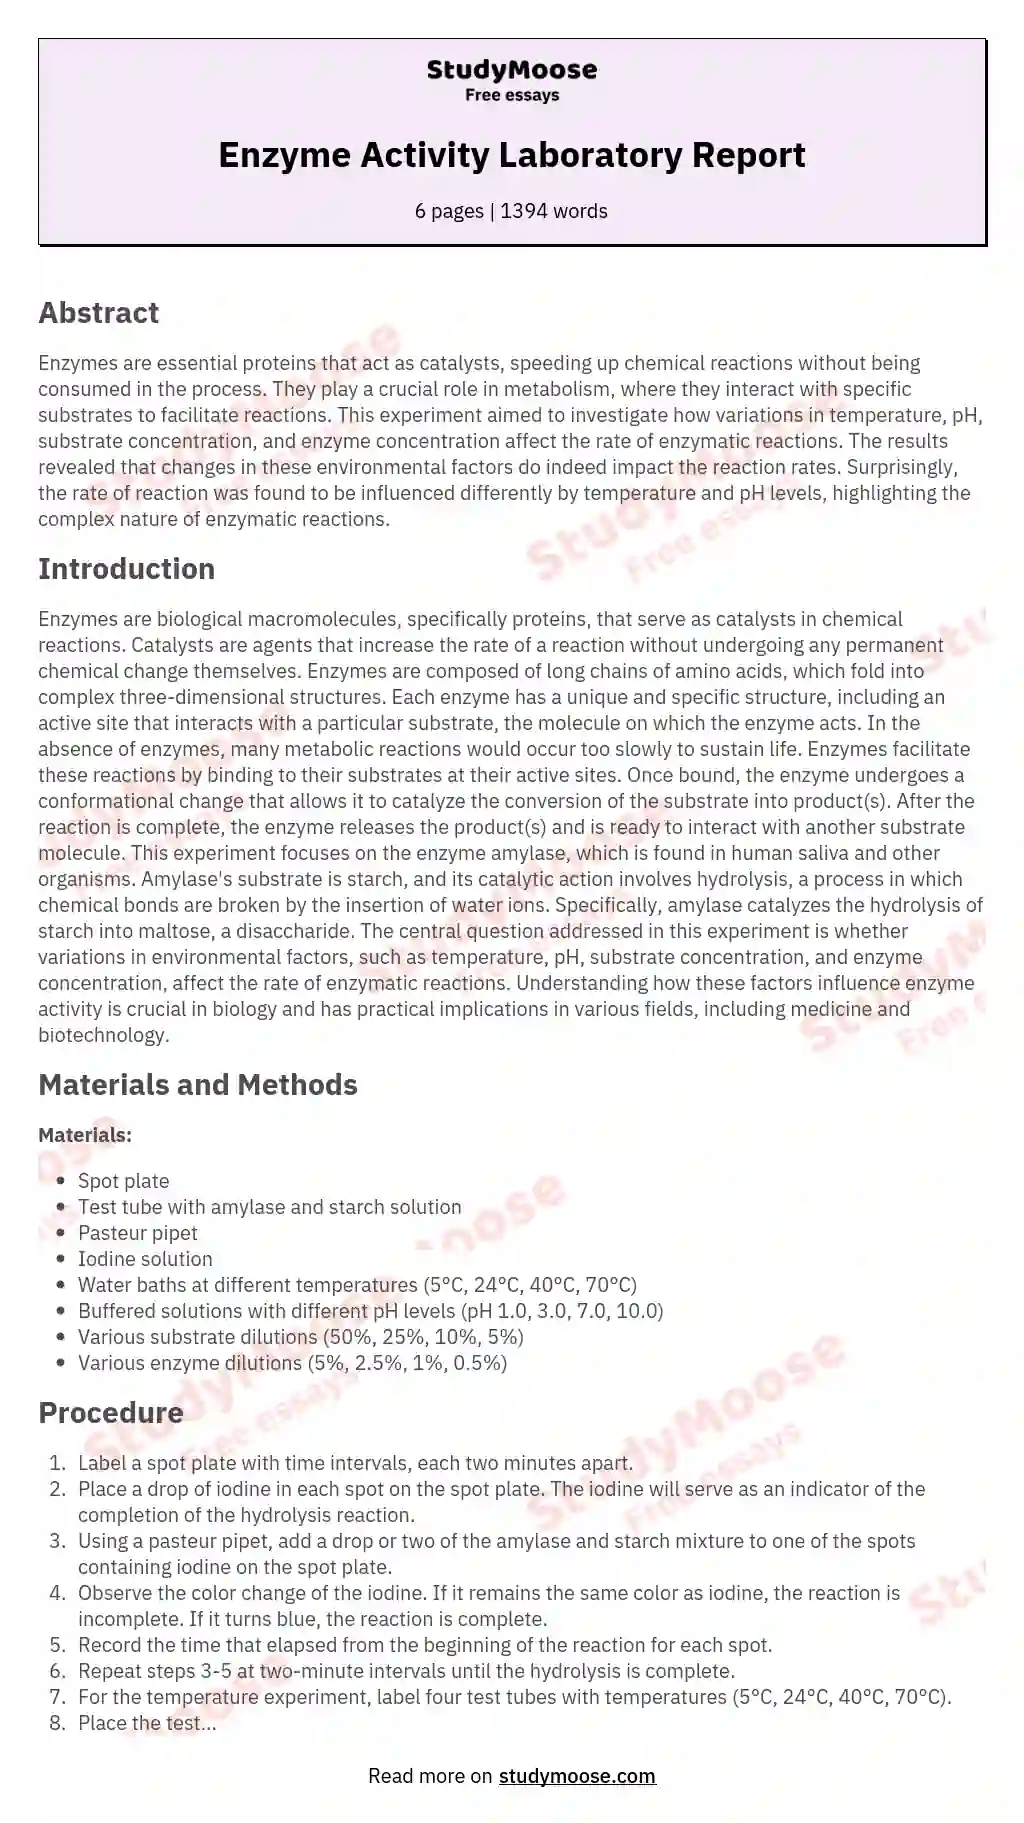 Enzyme Activity Laboratory Report essay